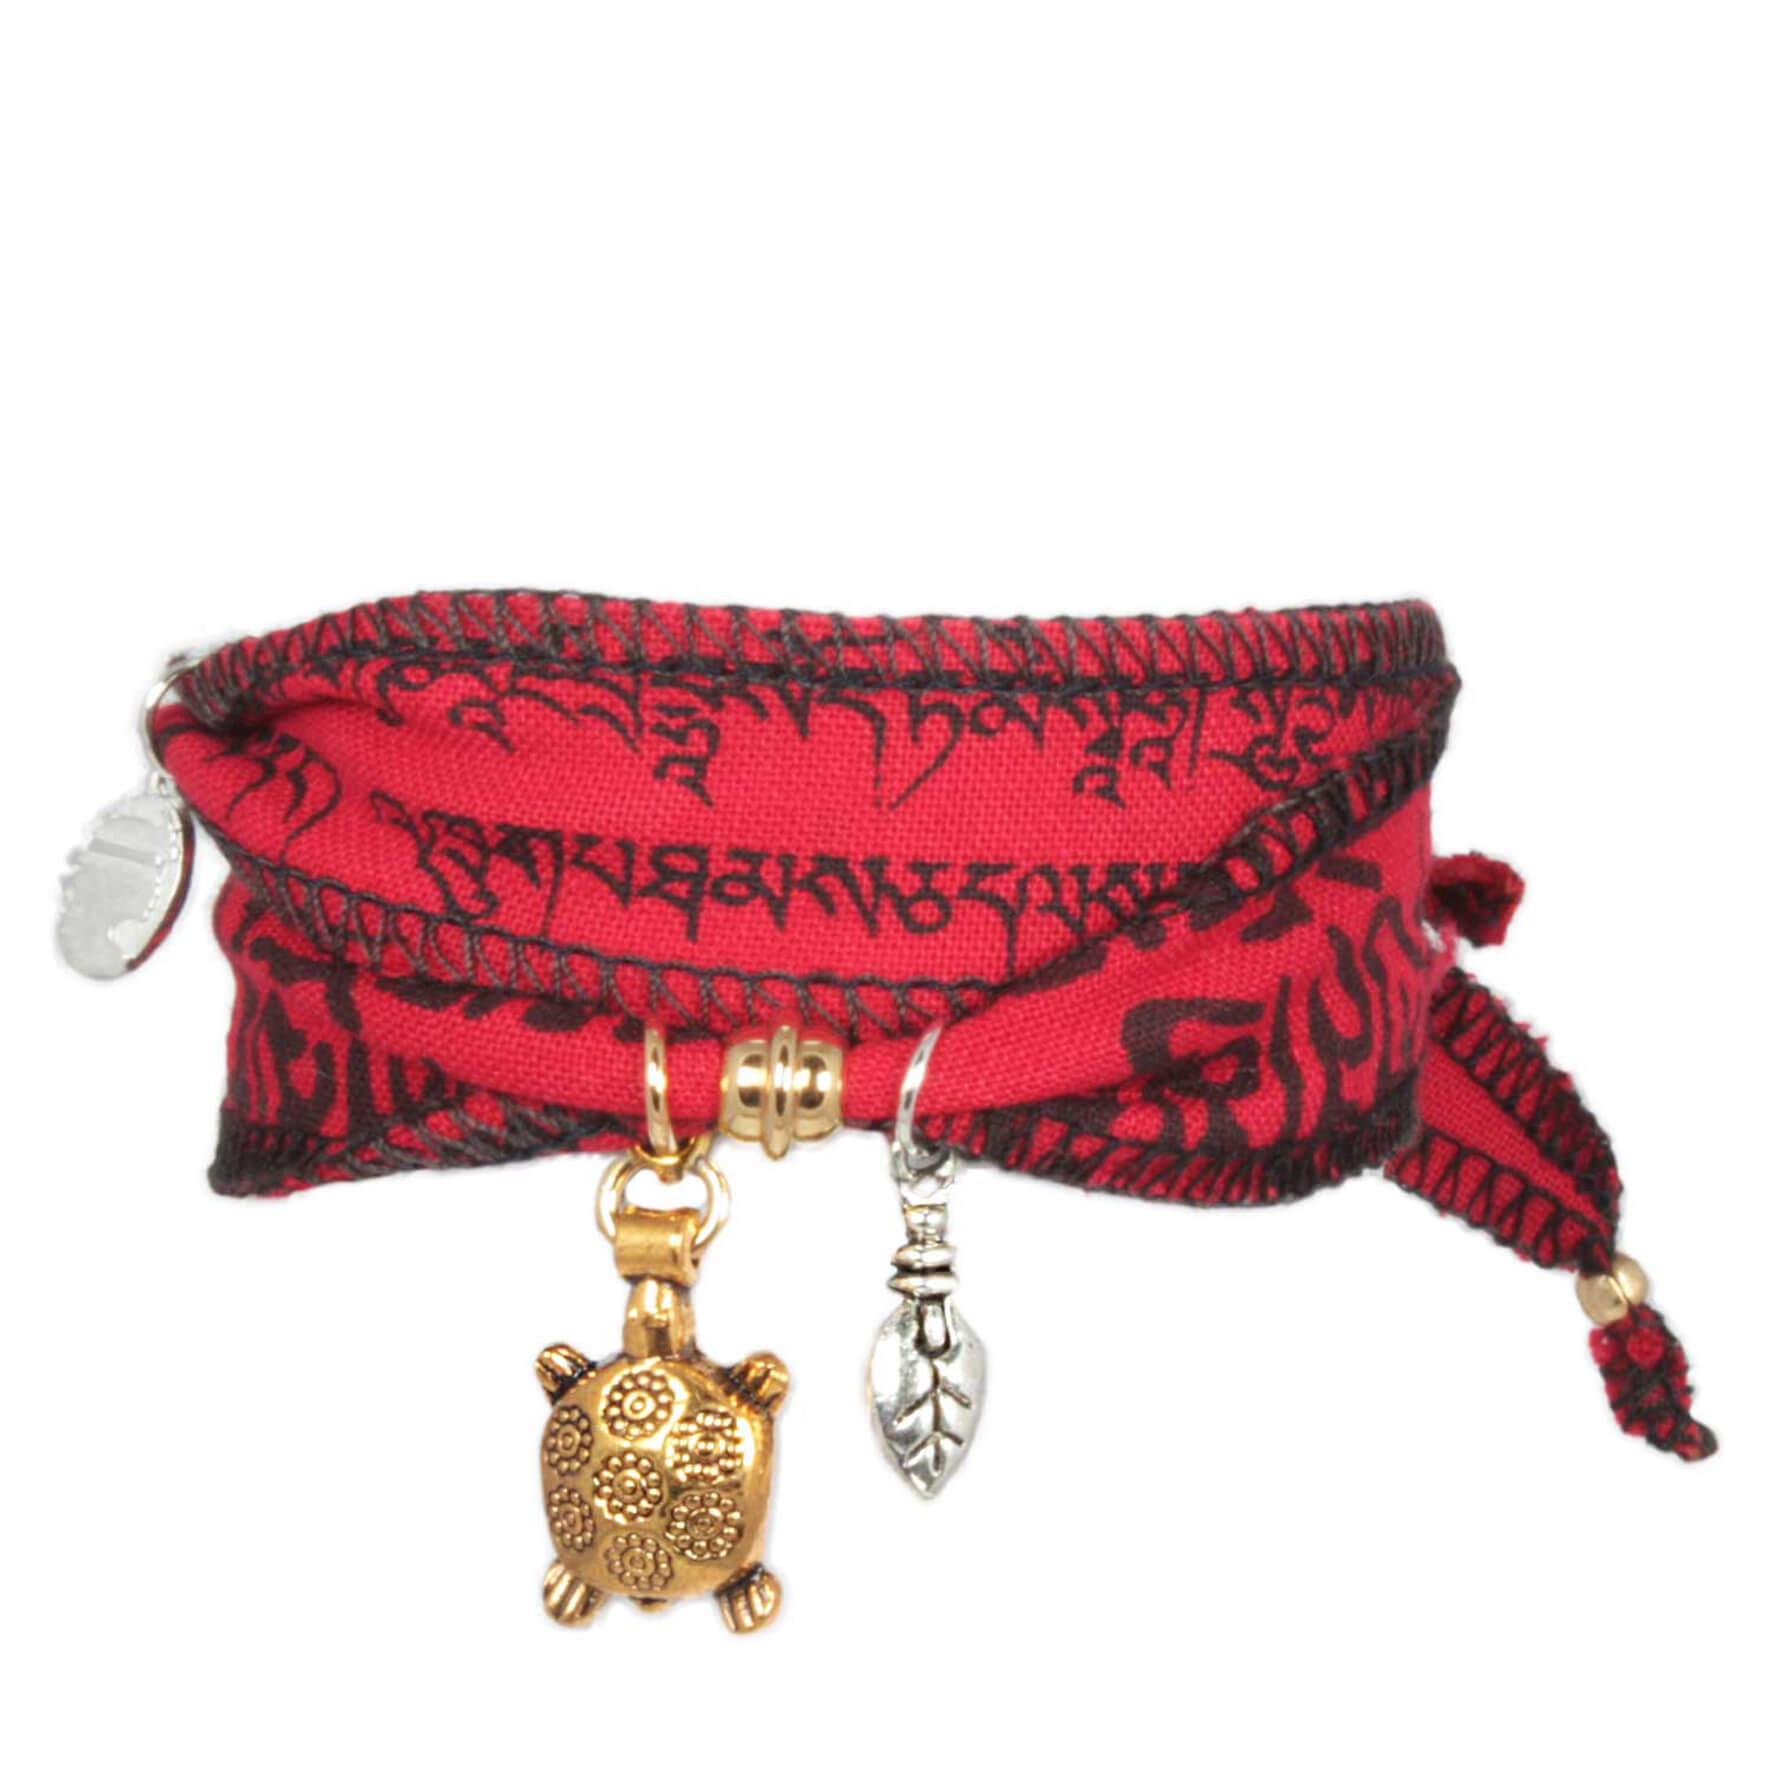 Fire Turtle - Tibetan Wish bracelet made from Tibetan prayer flags